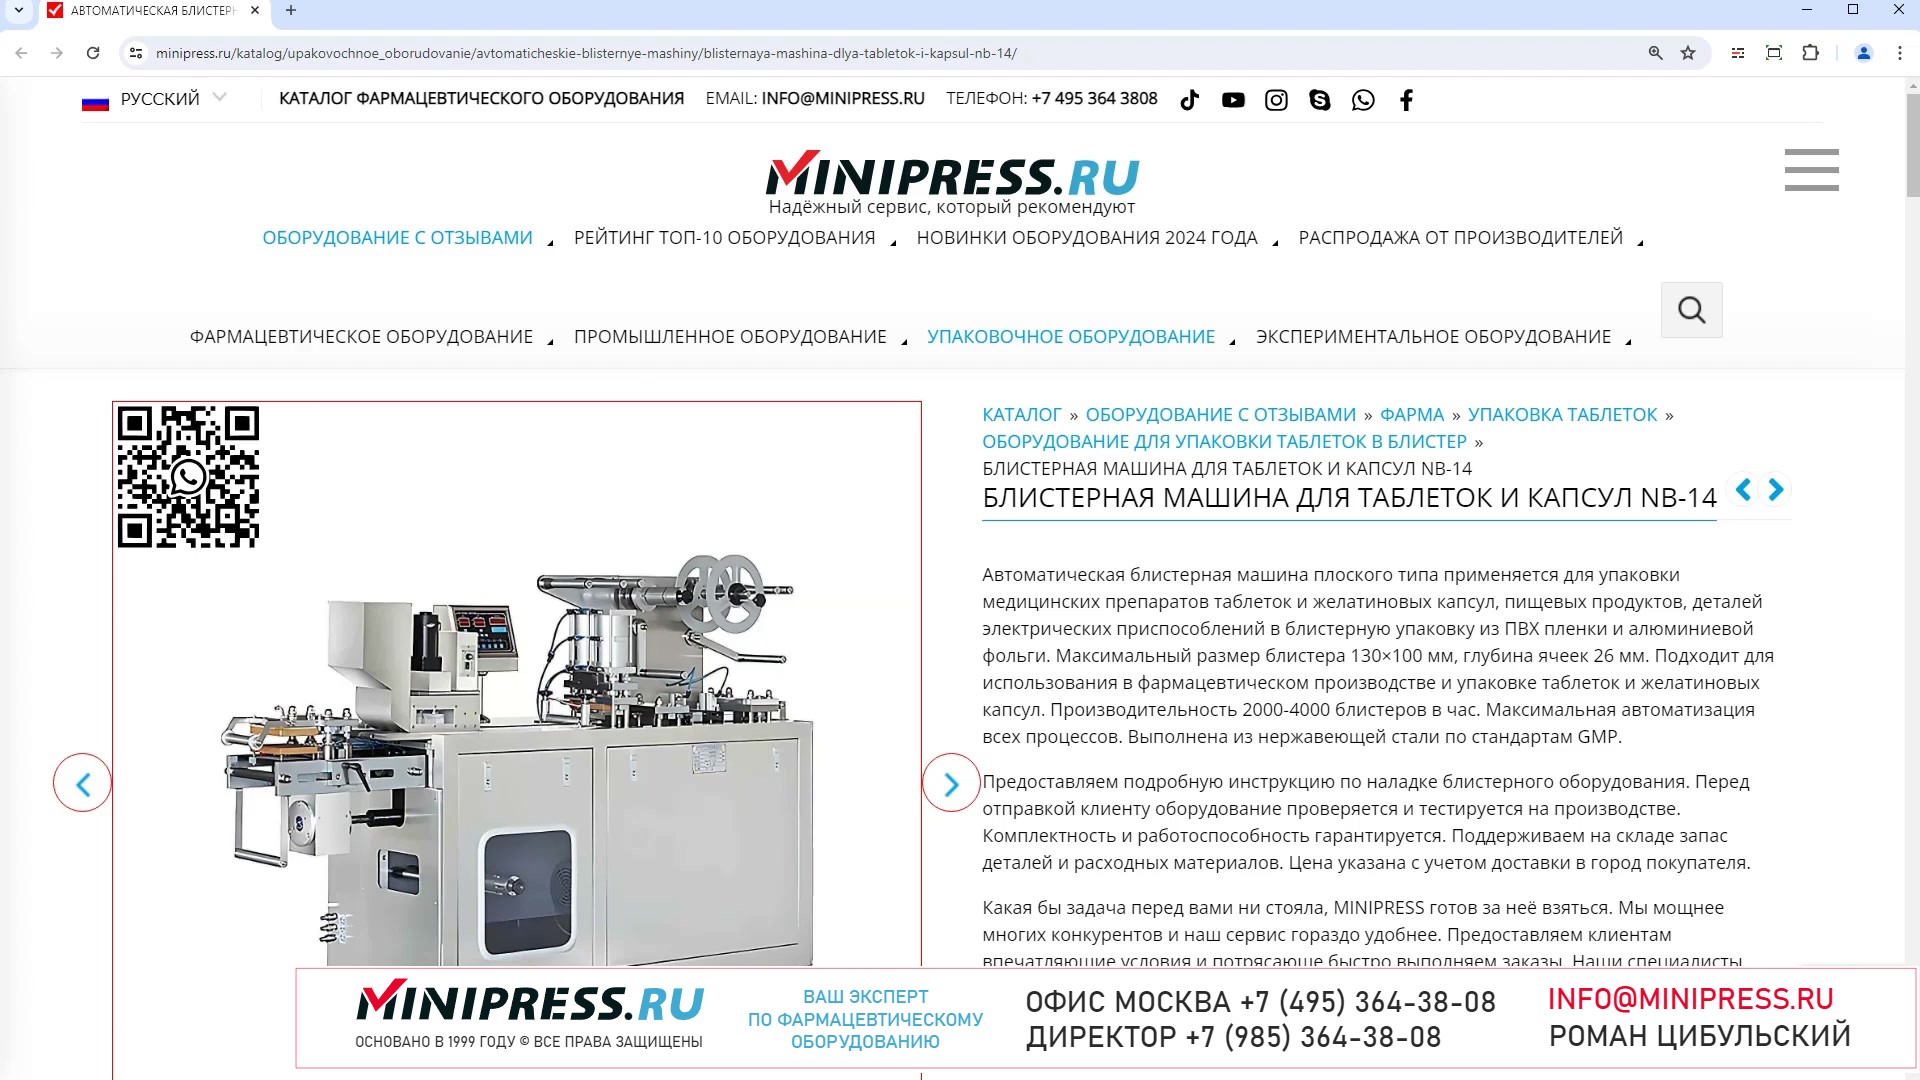 Minipress.ru Блистерная машина для таблеток и капсул NB-14